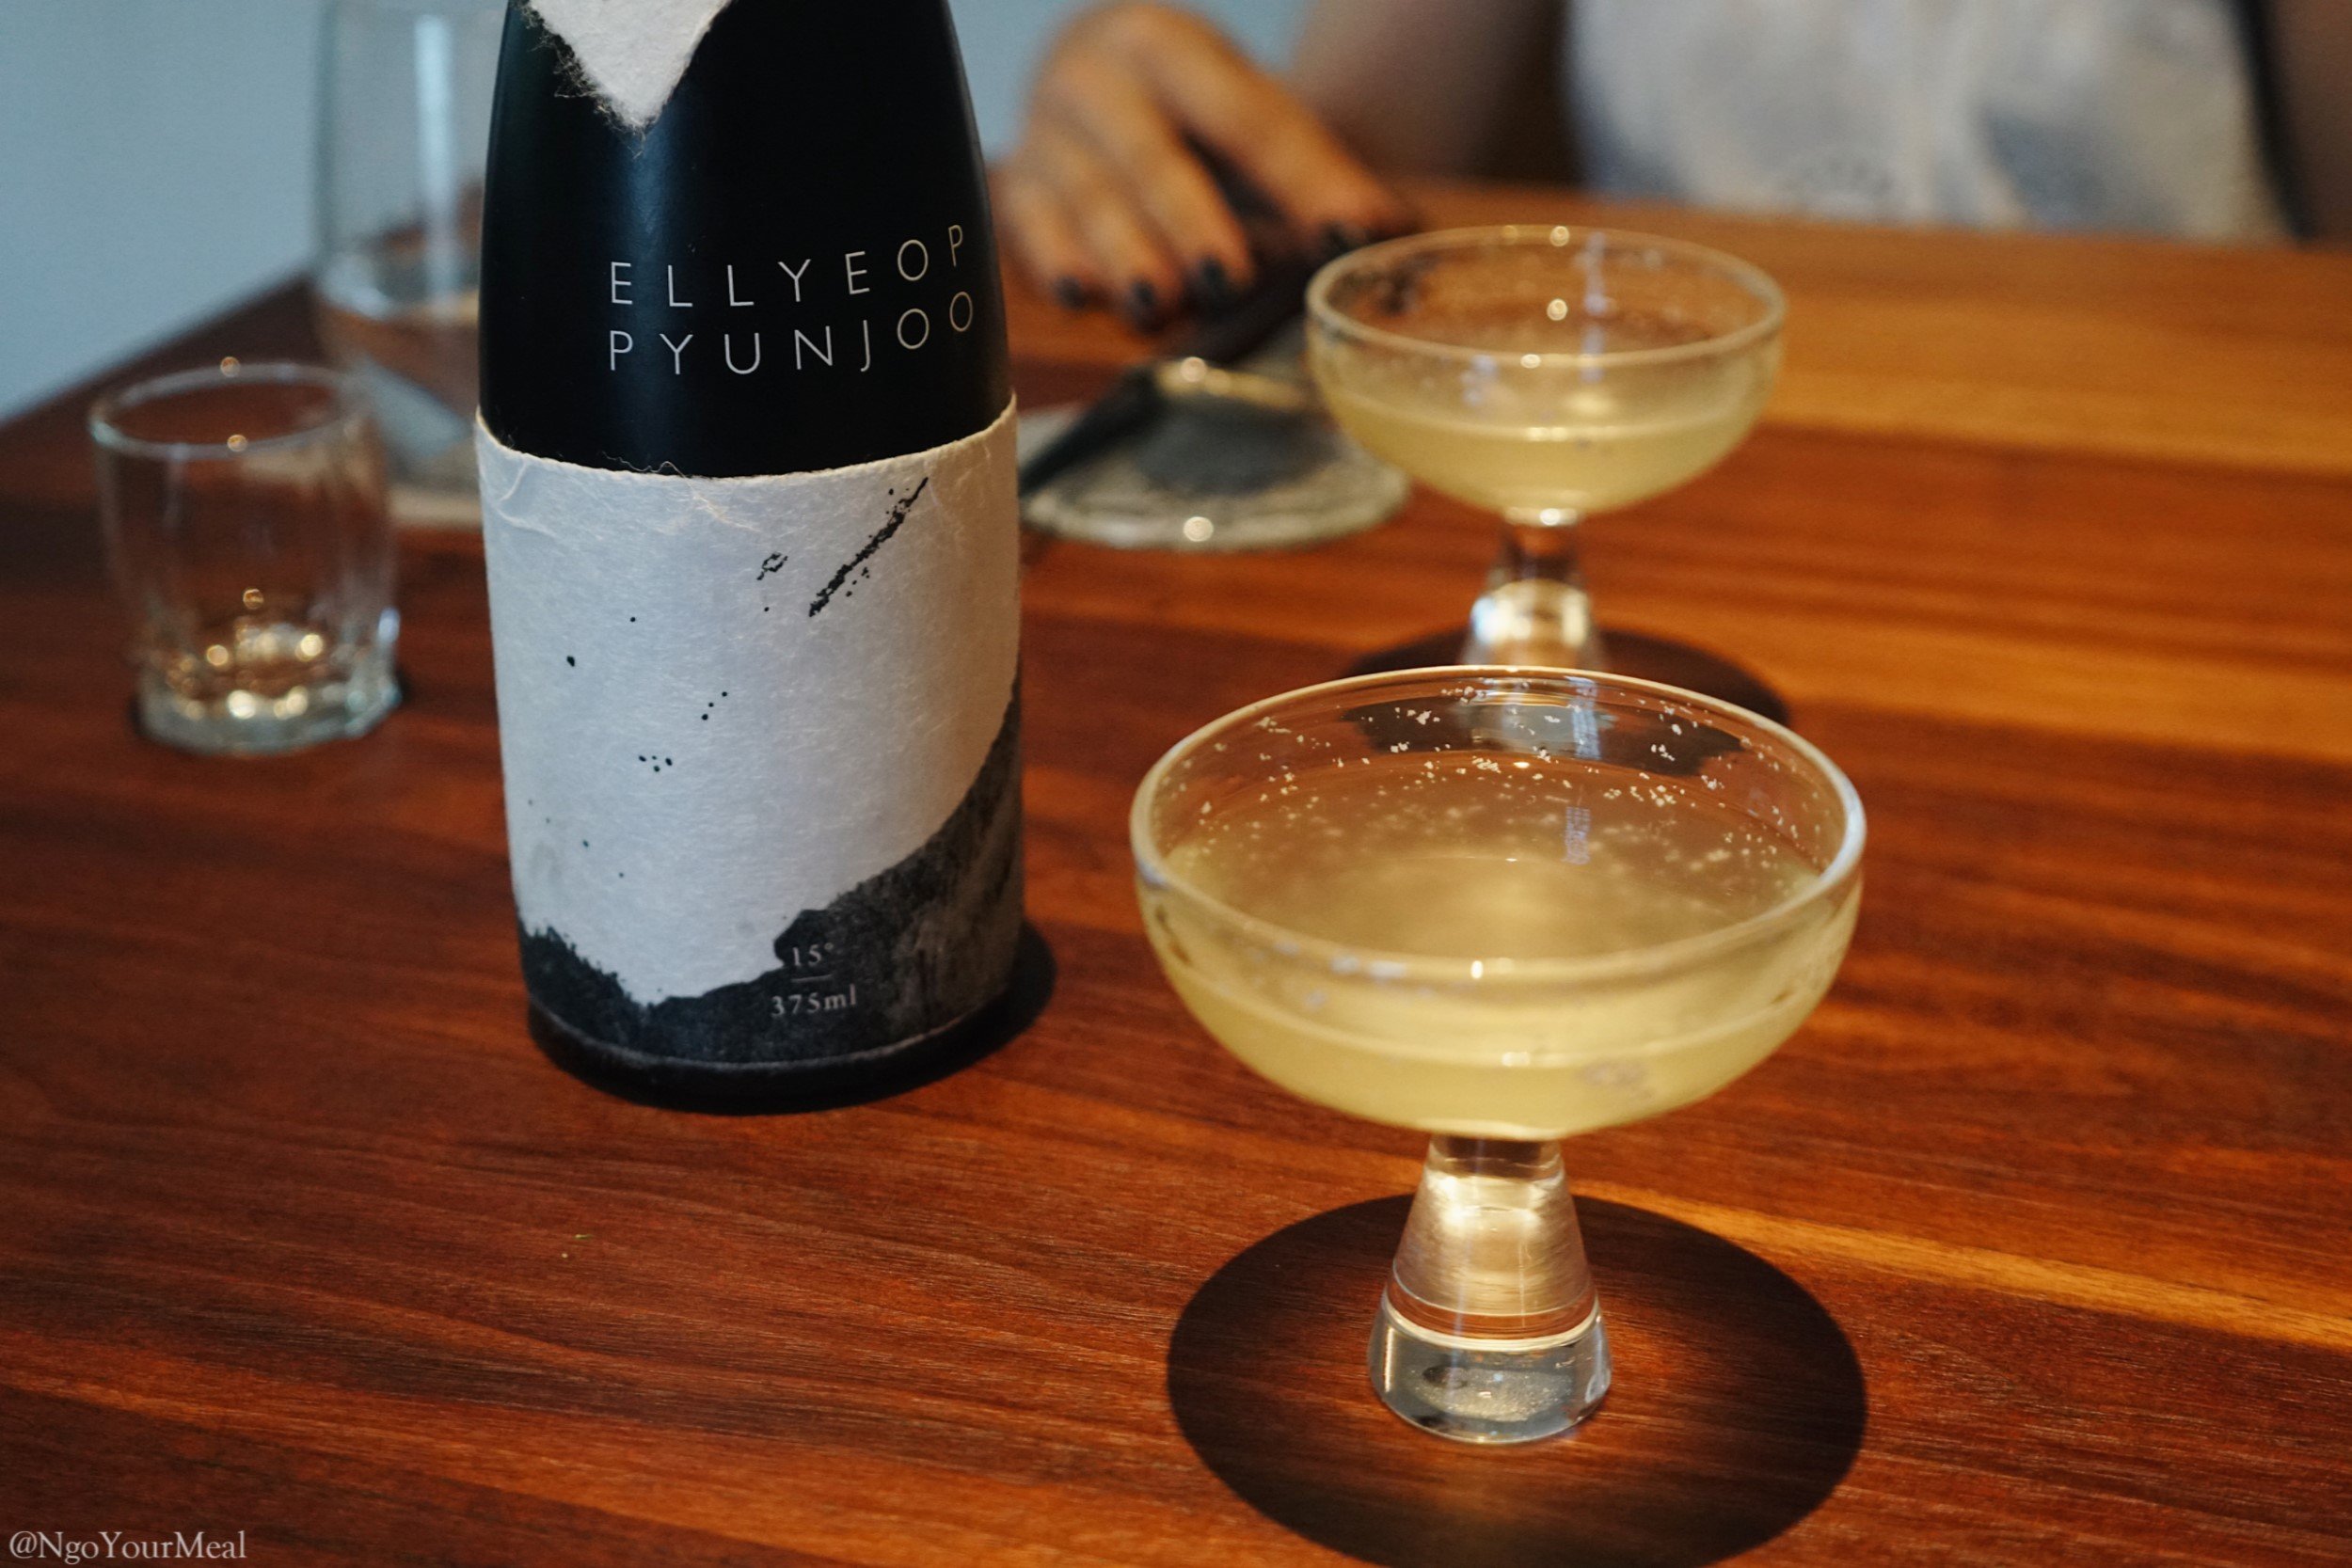 Ellyeop Pyunjoo: Fresh Turbid Rice Wine